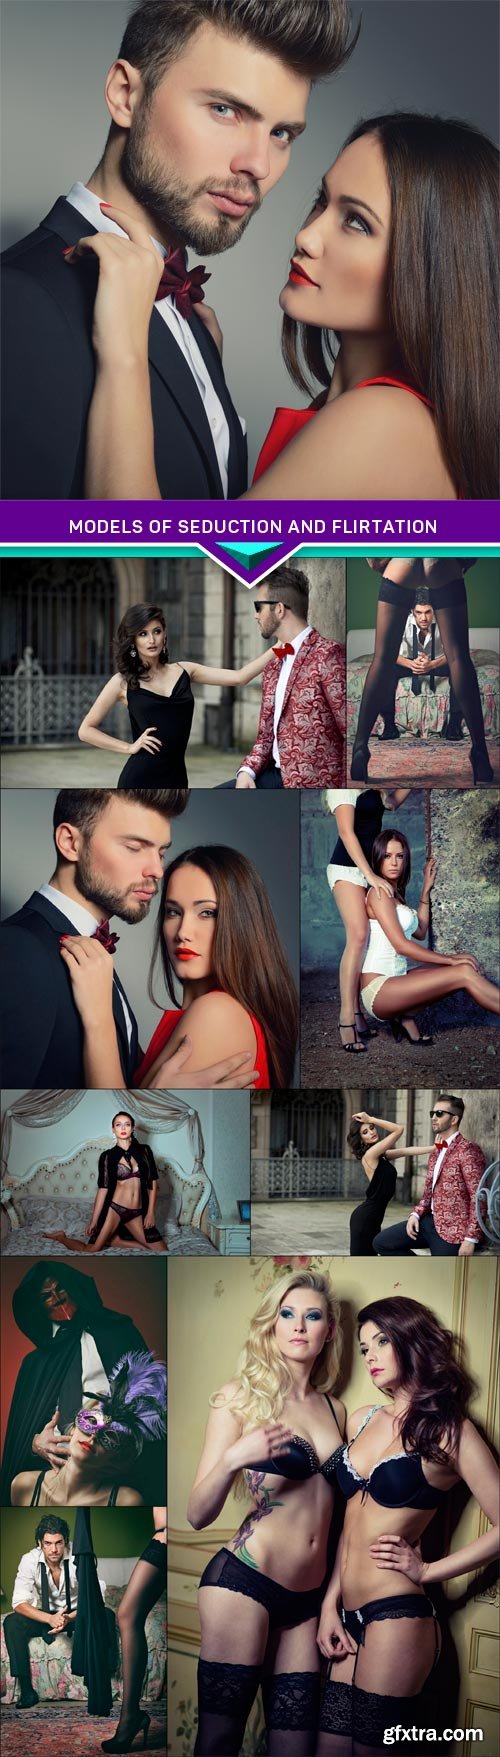 Models of seduction and flirtation 10x JPEG